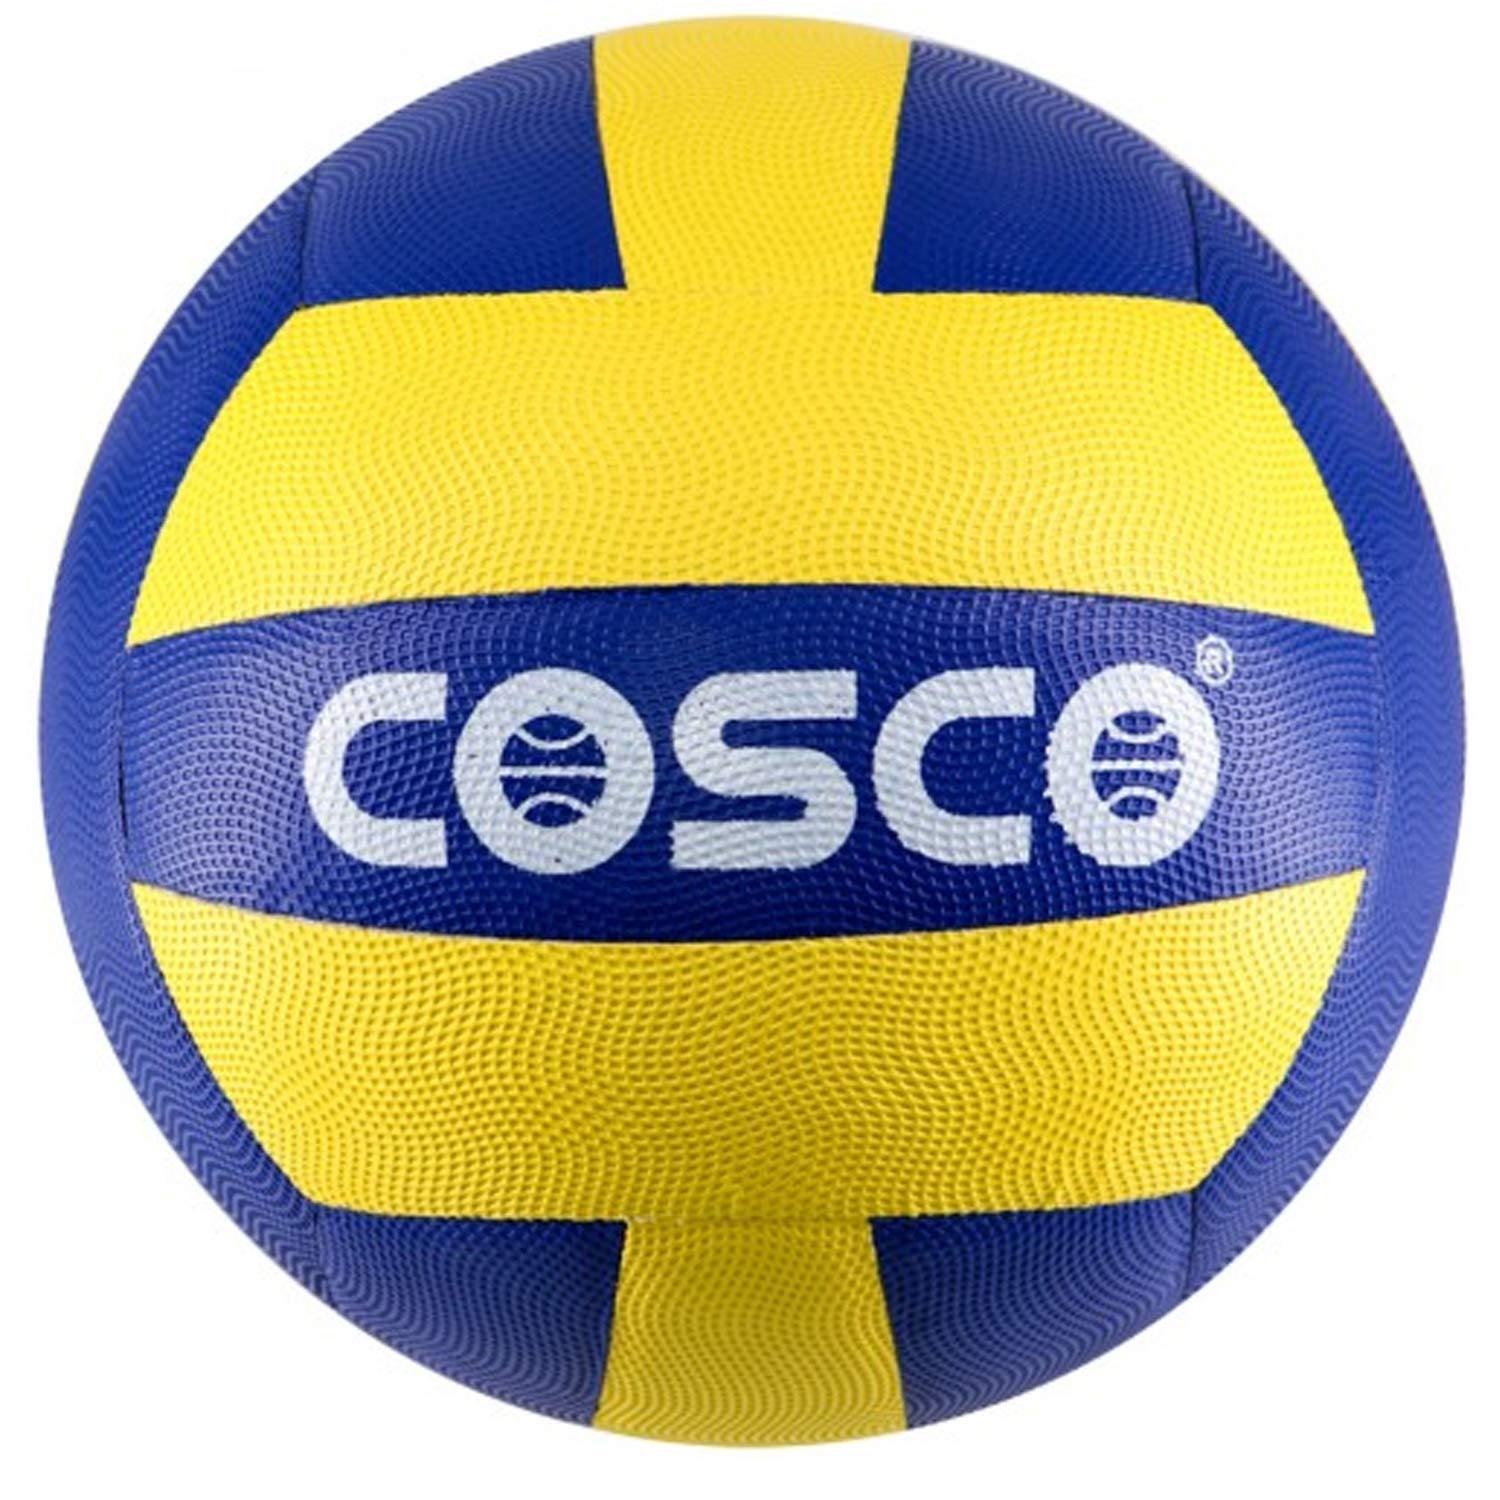 Cosco Floater Volleyball Size-4 - Best Price online Prokicksports.com